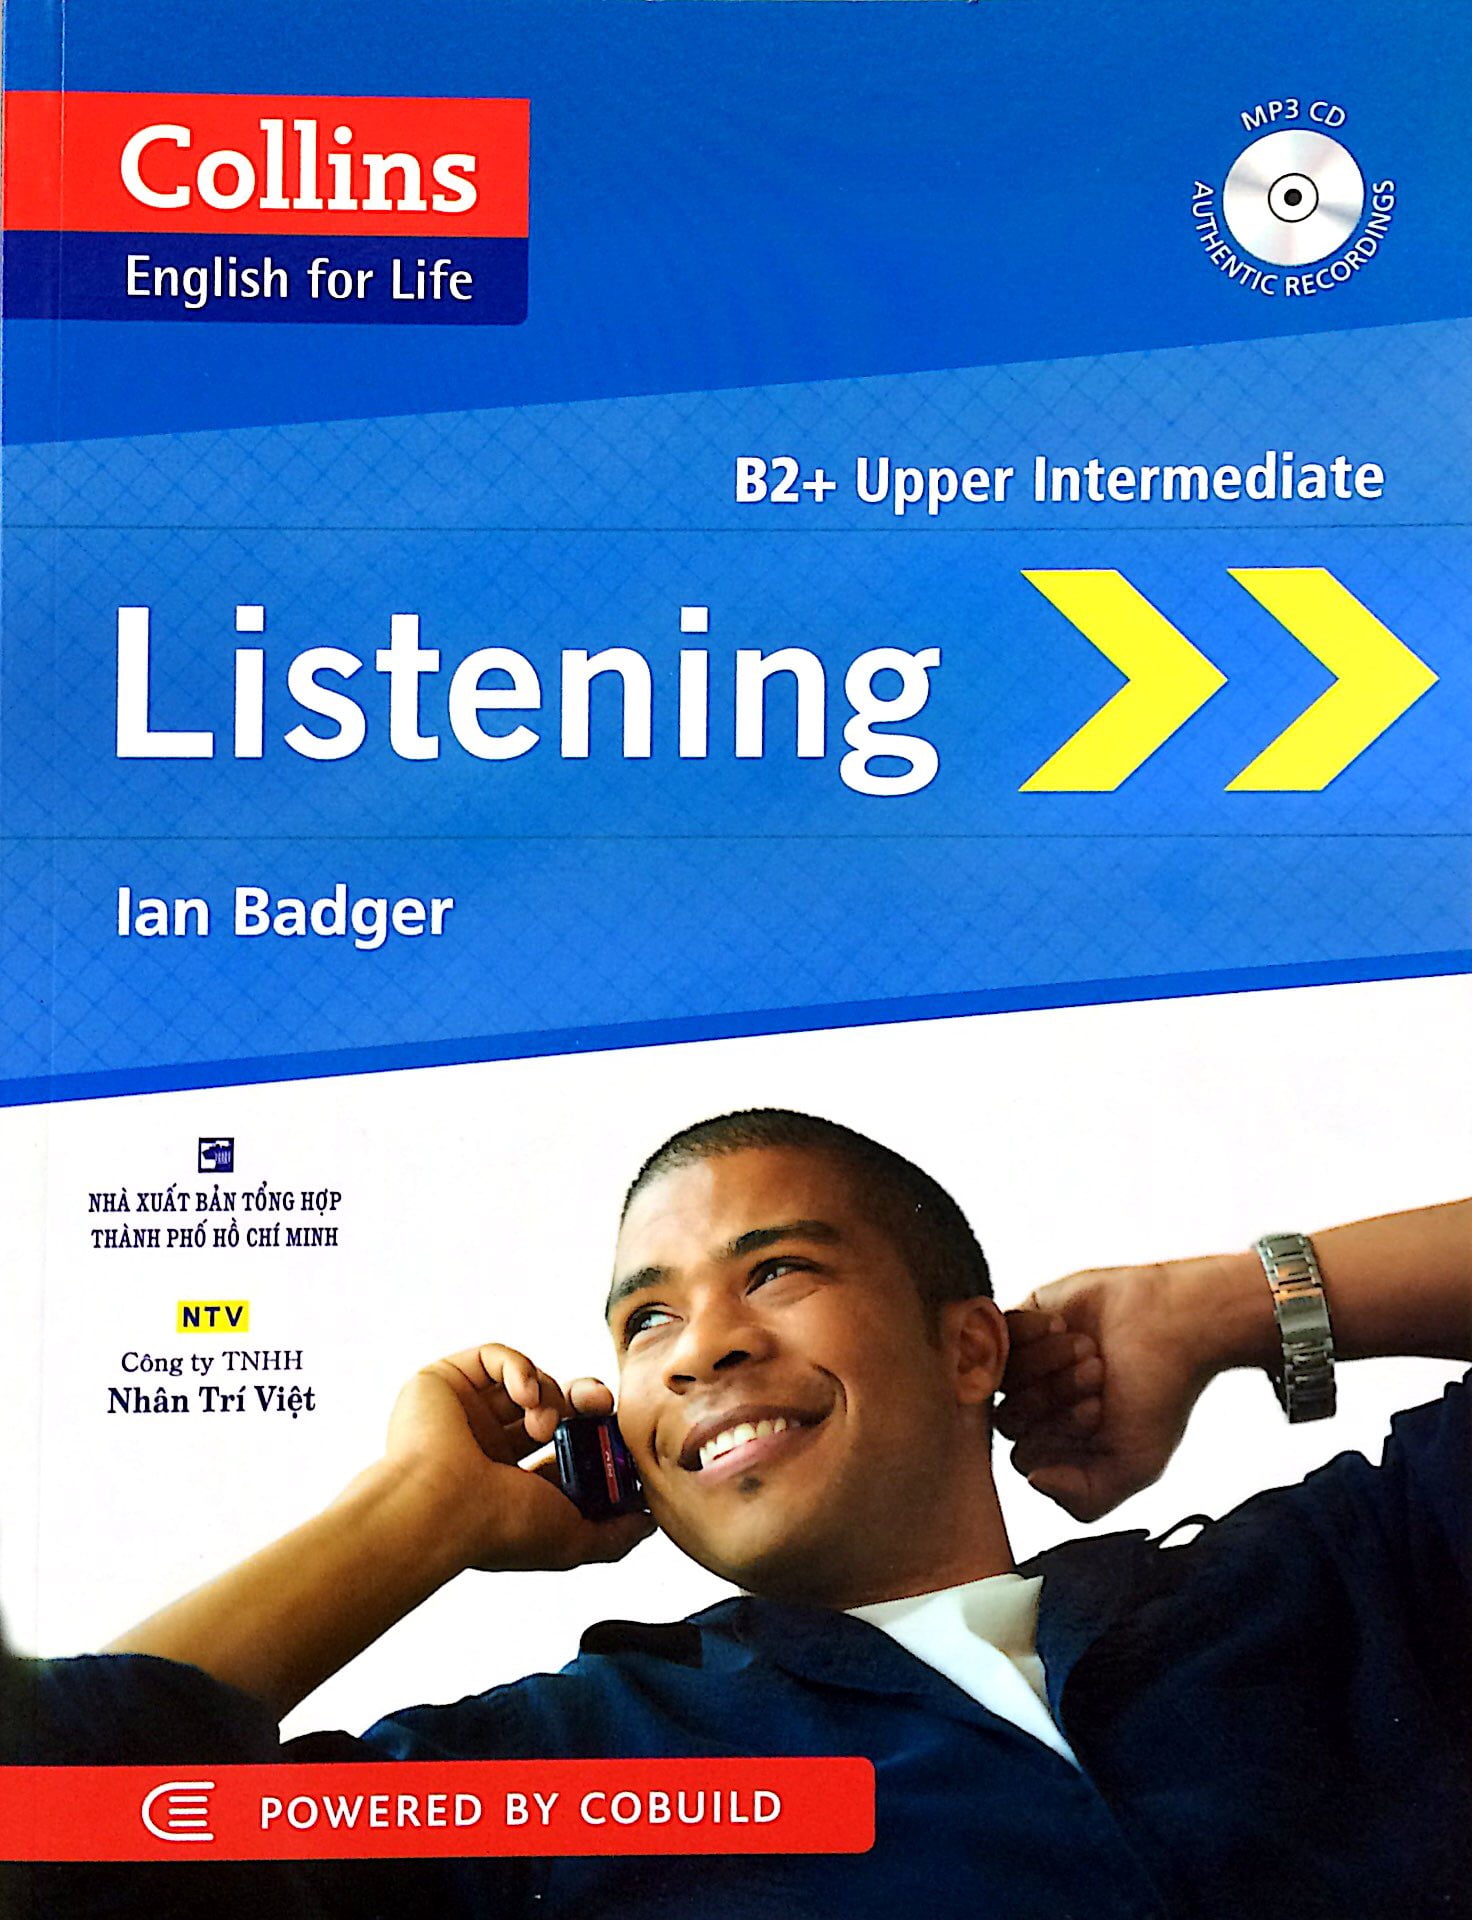 Collins English For Life_Listening_B2 Upper Intermediate CD PDF